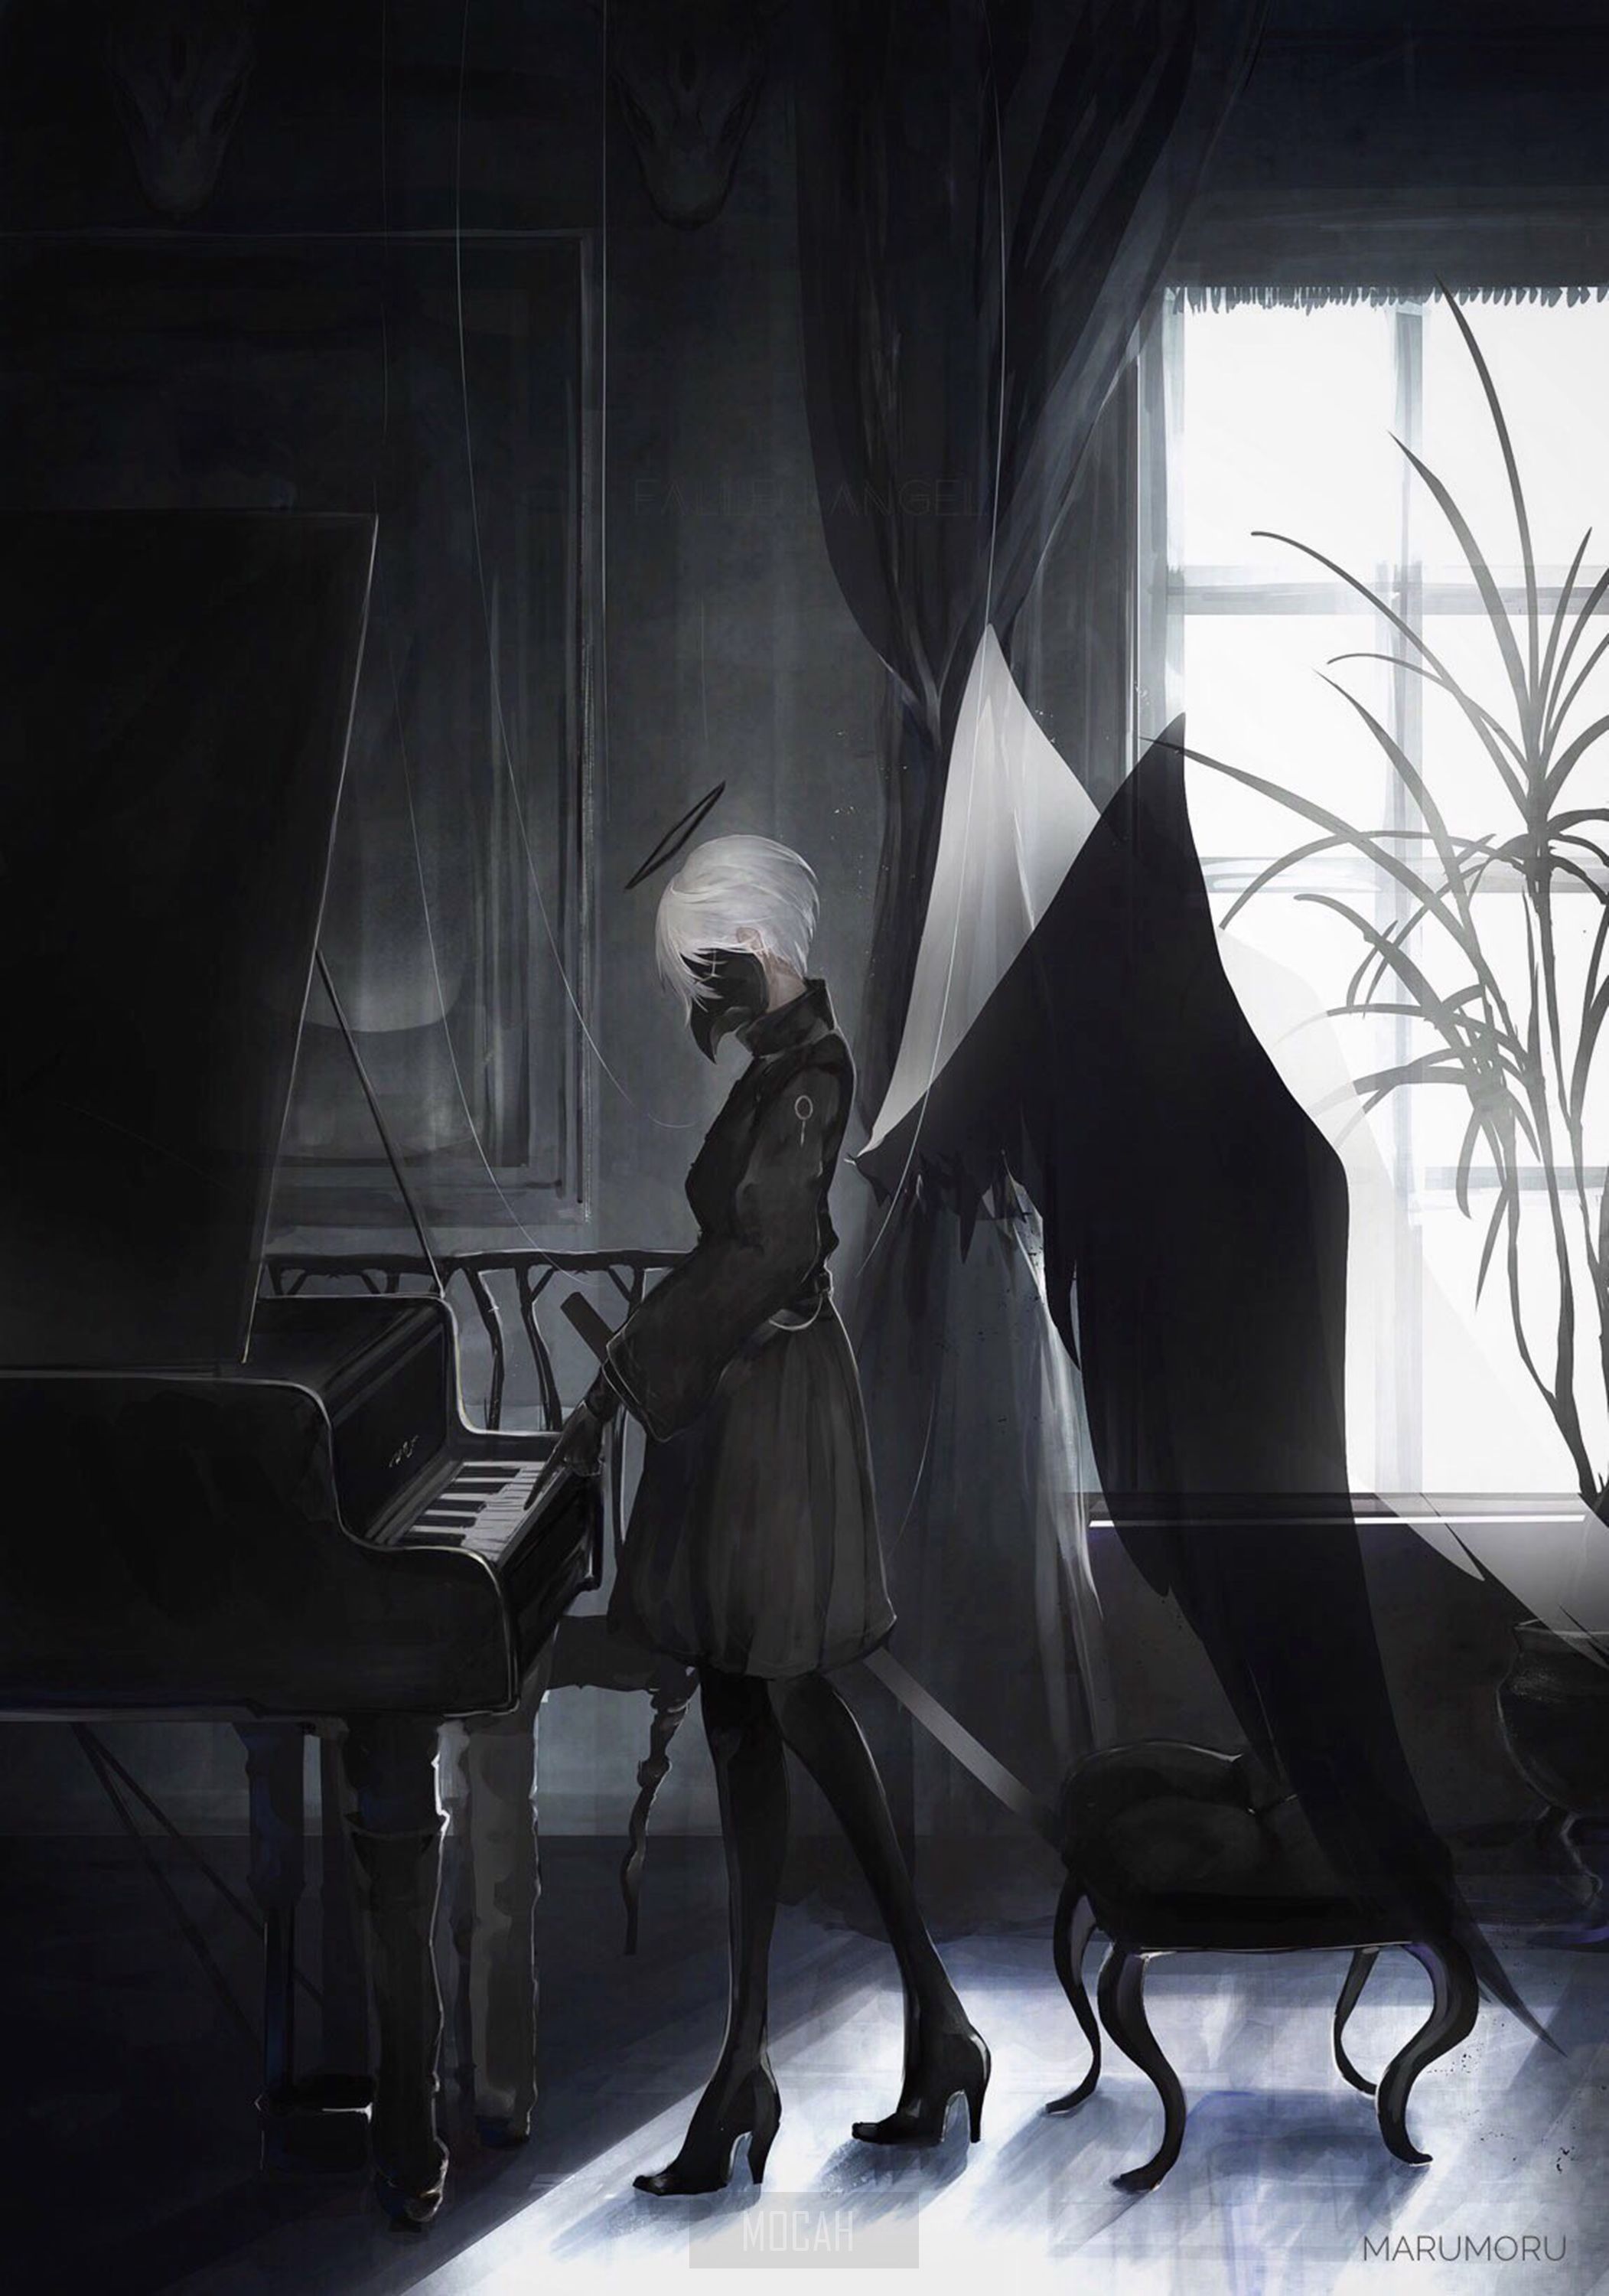  Klavier Anime Hintergrundbild 2103x3000. anime girl, anime, original character, marumoru, dark, piano, musical instrument, black and white screensaver hd, 2103x3000 Gallery HD Wallpaper